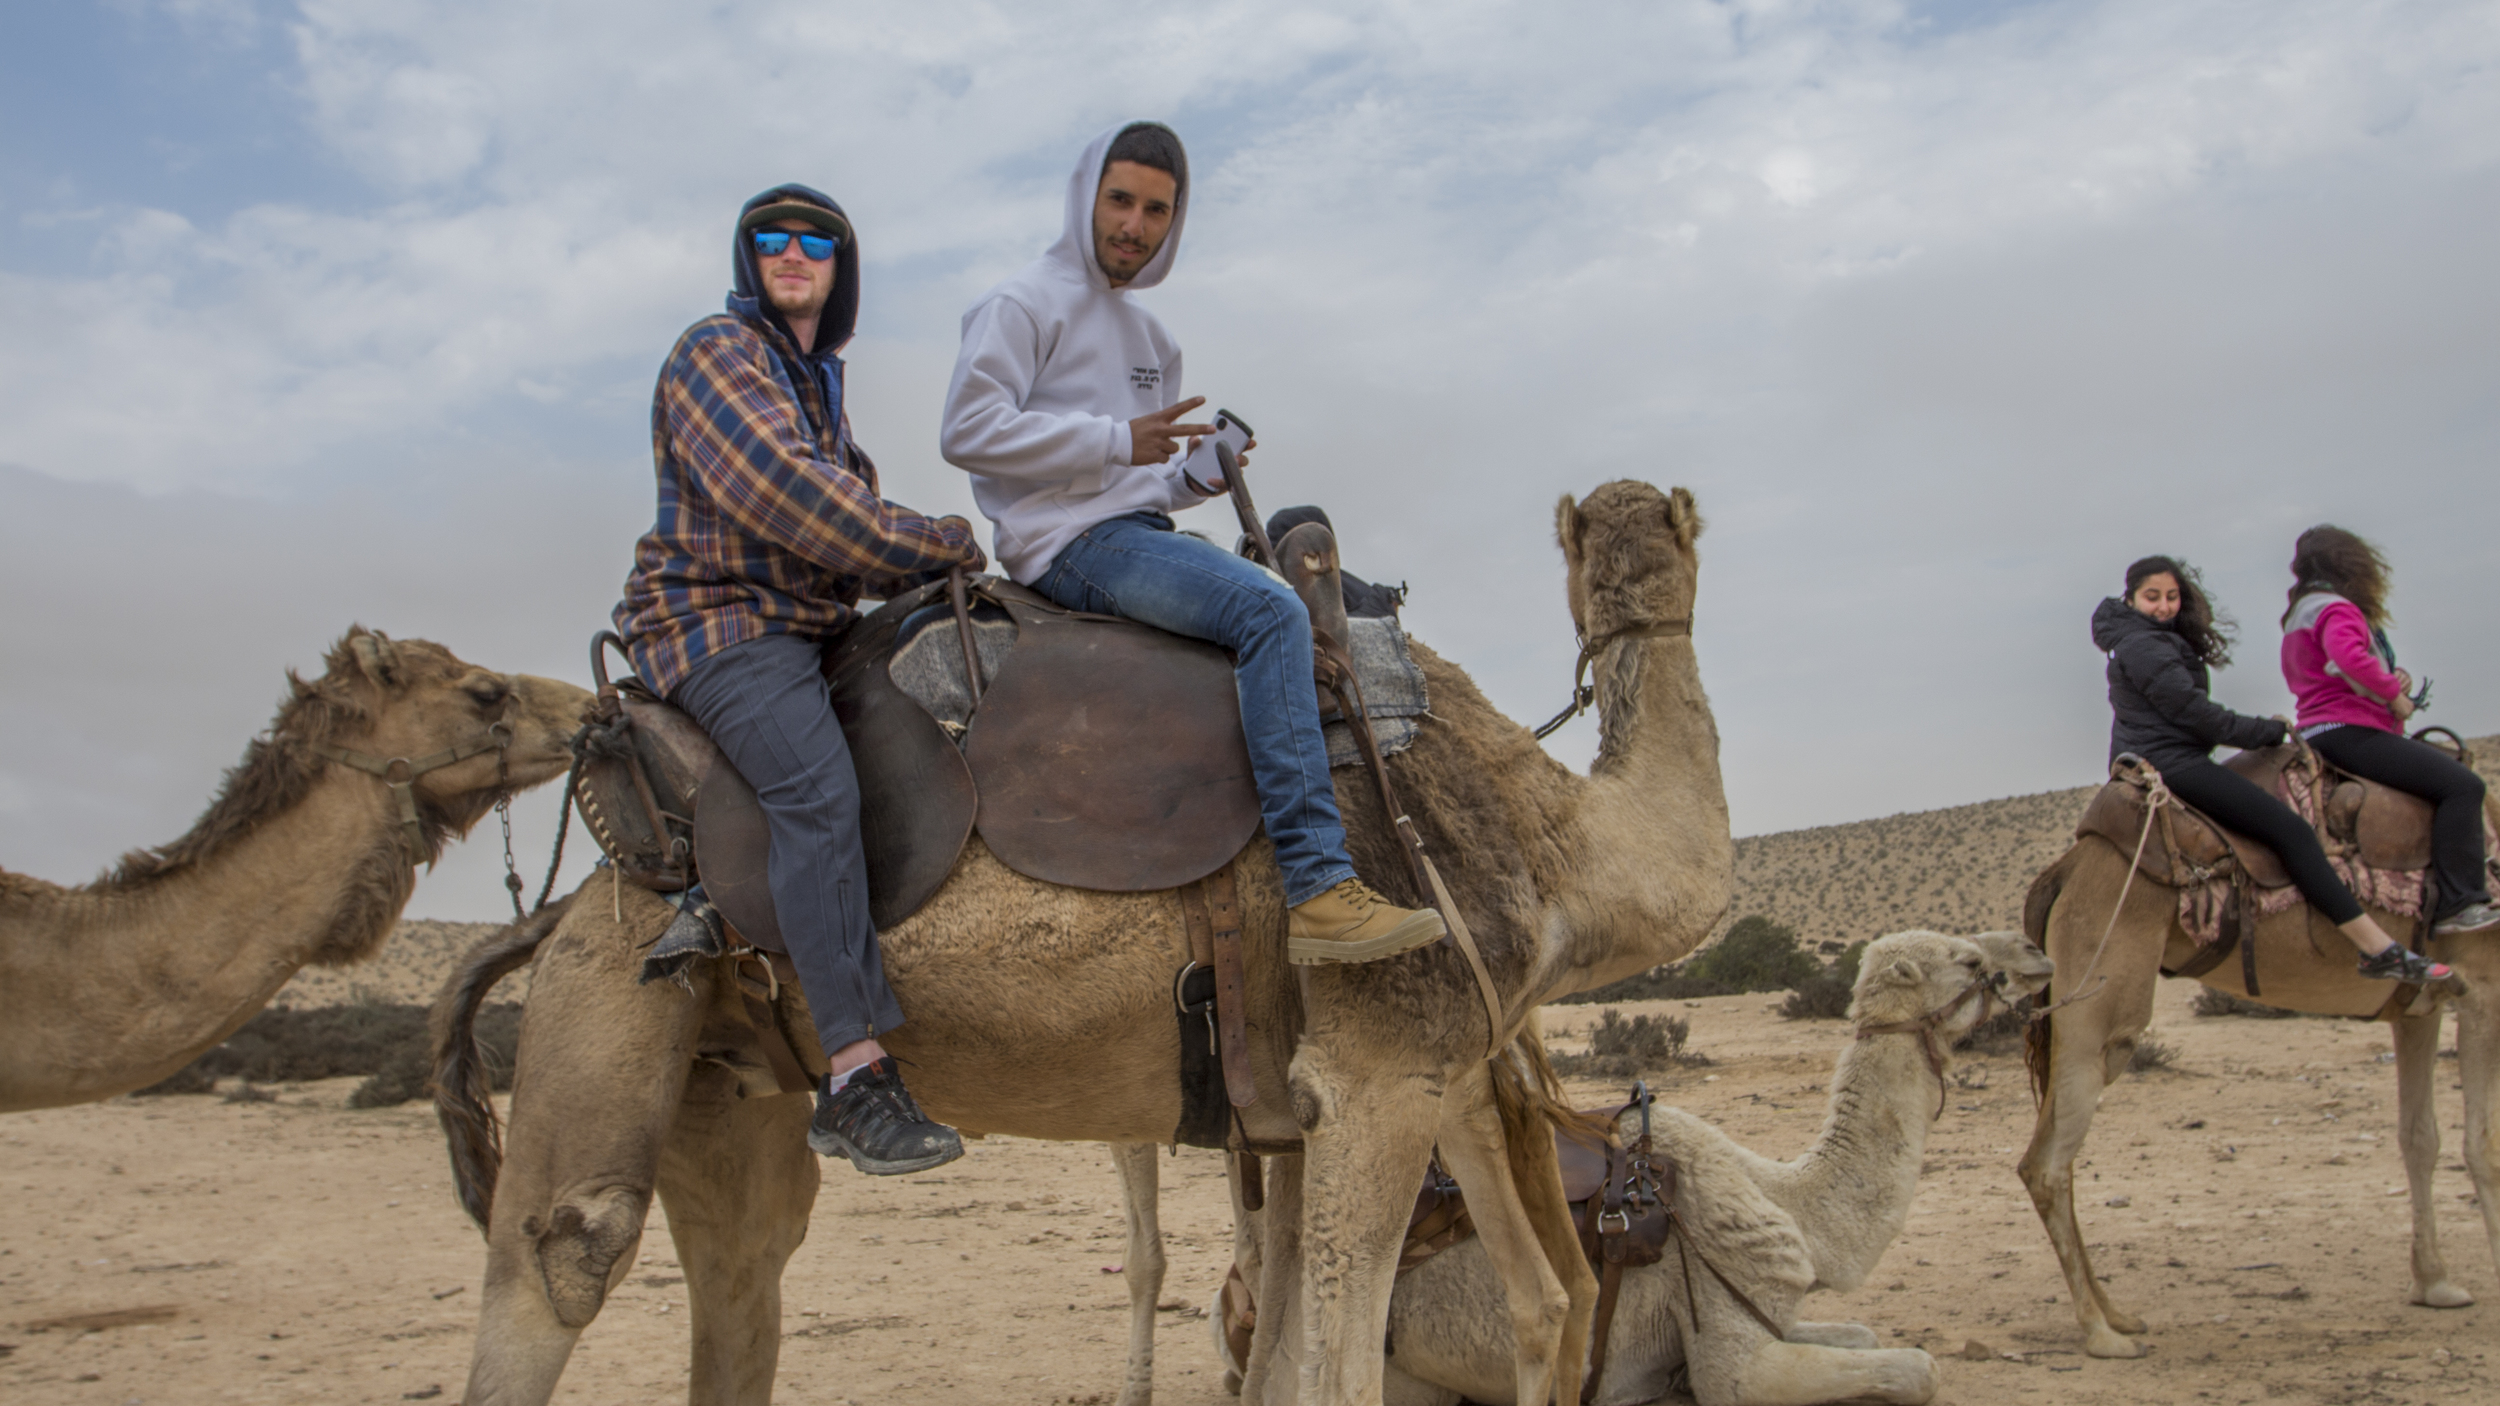 chad on camel.jpg